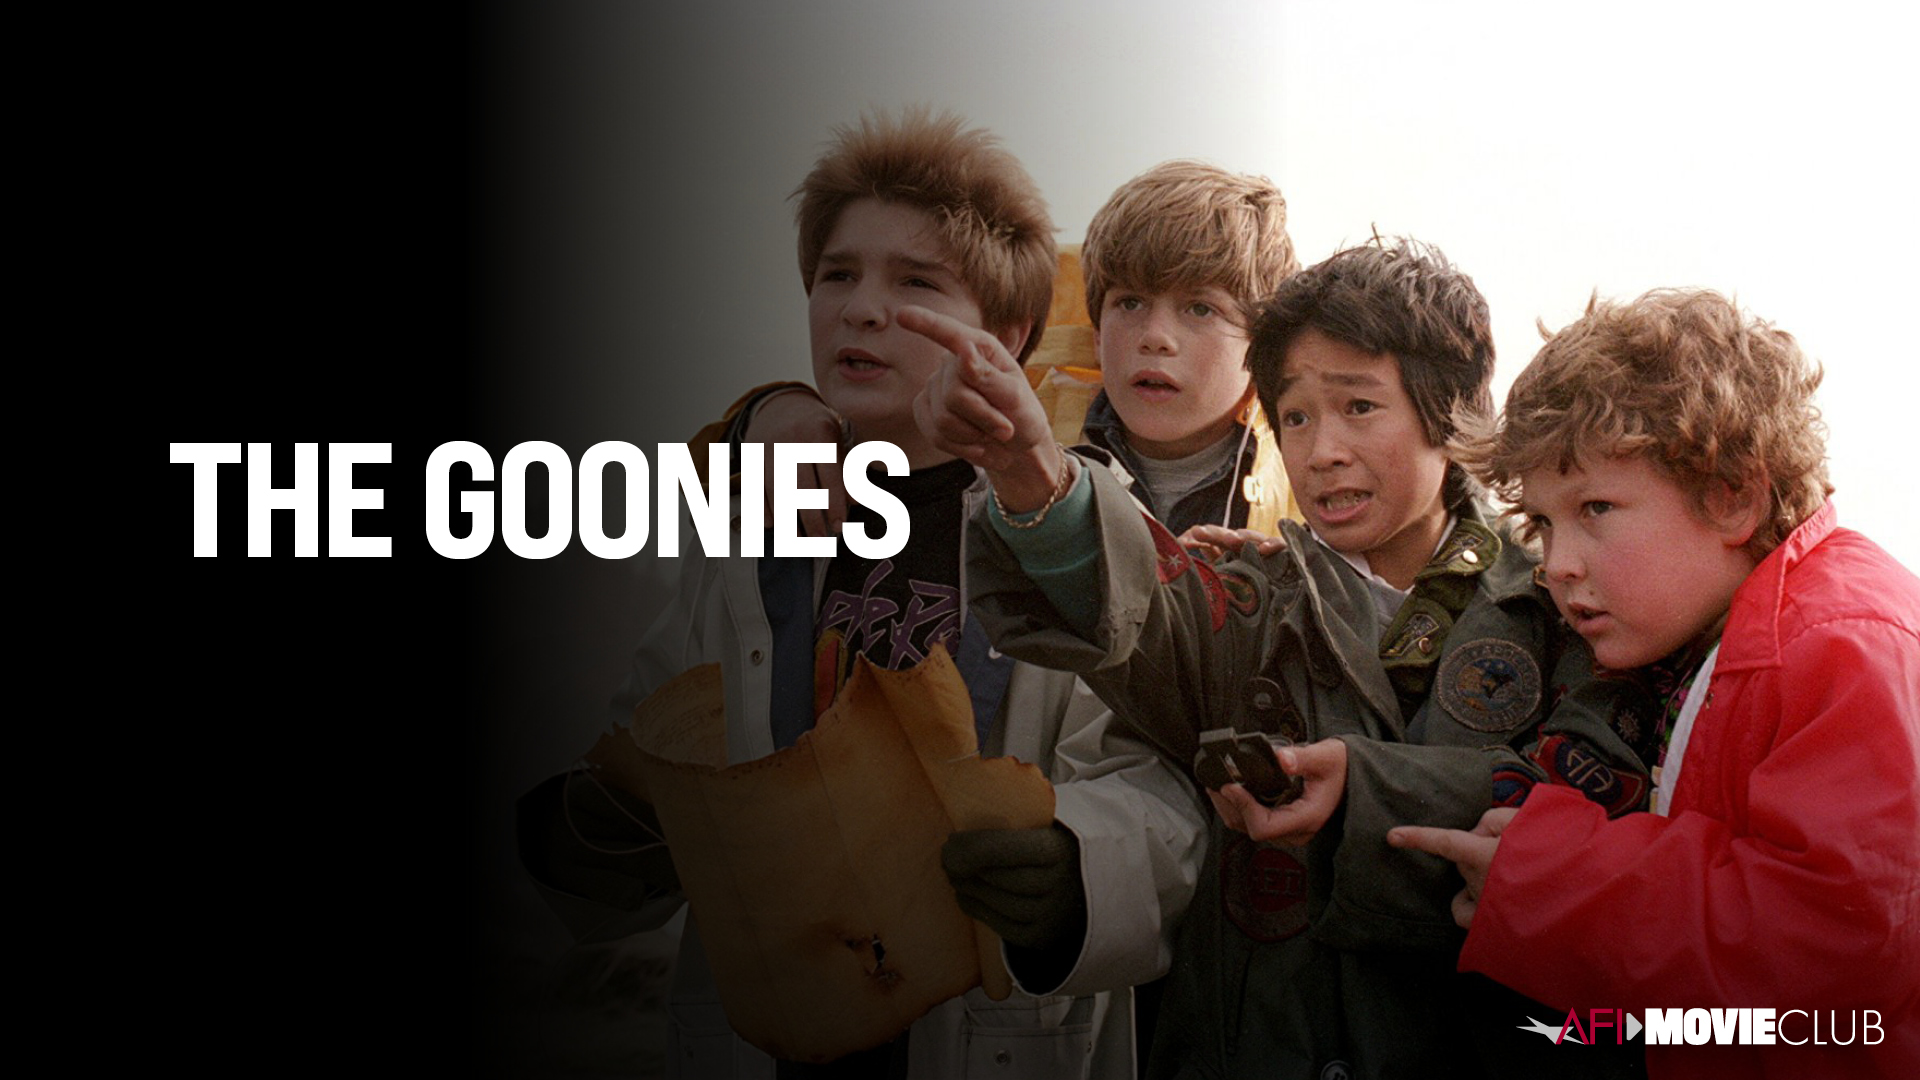 The Goonies Film Still - Sean Astin, Corey Feldman, Jeff Cohen, and Ke Huy Quan